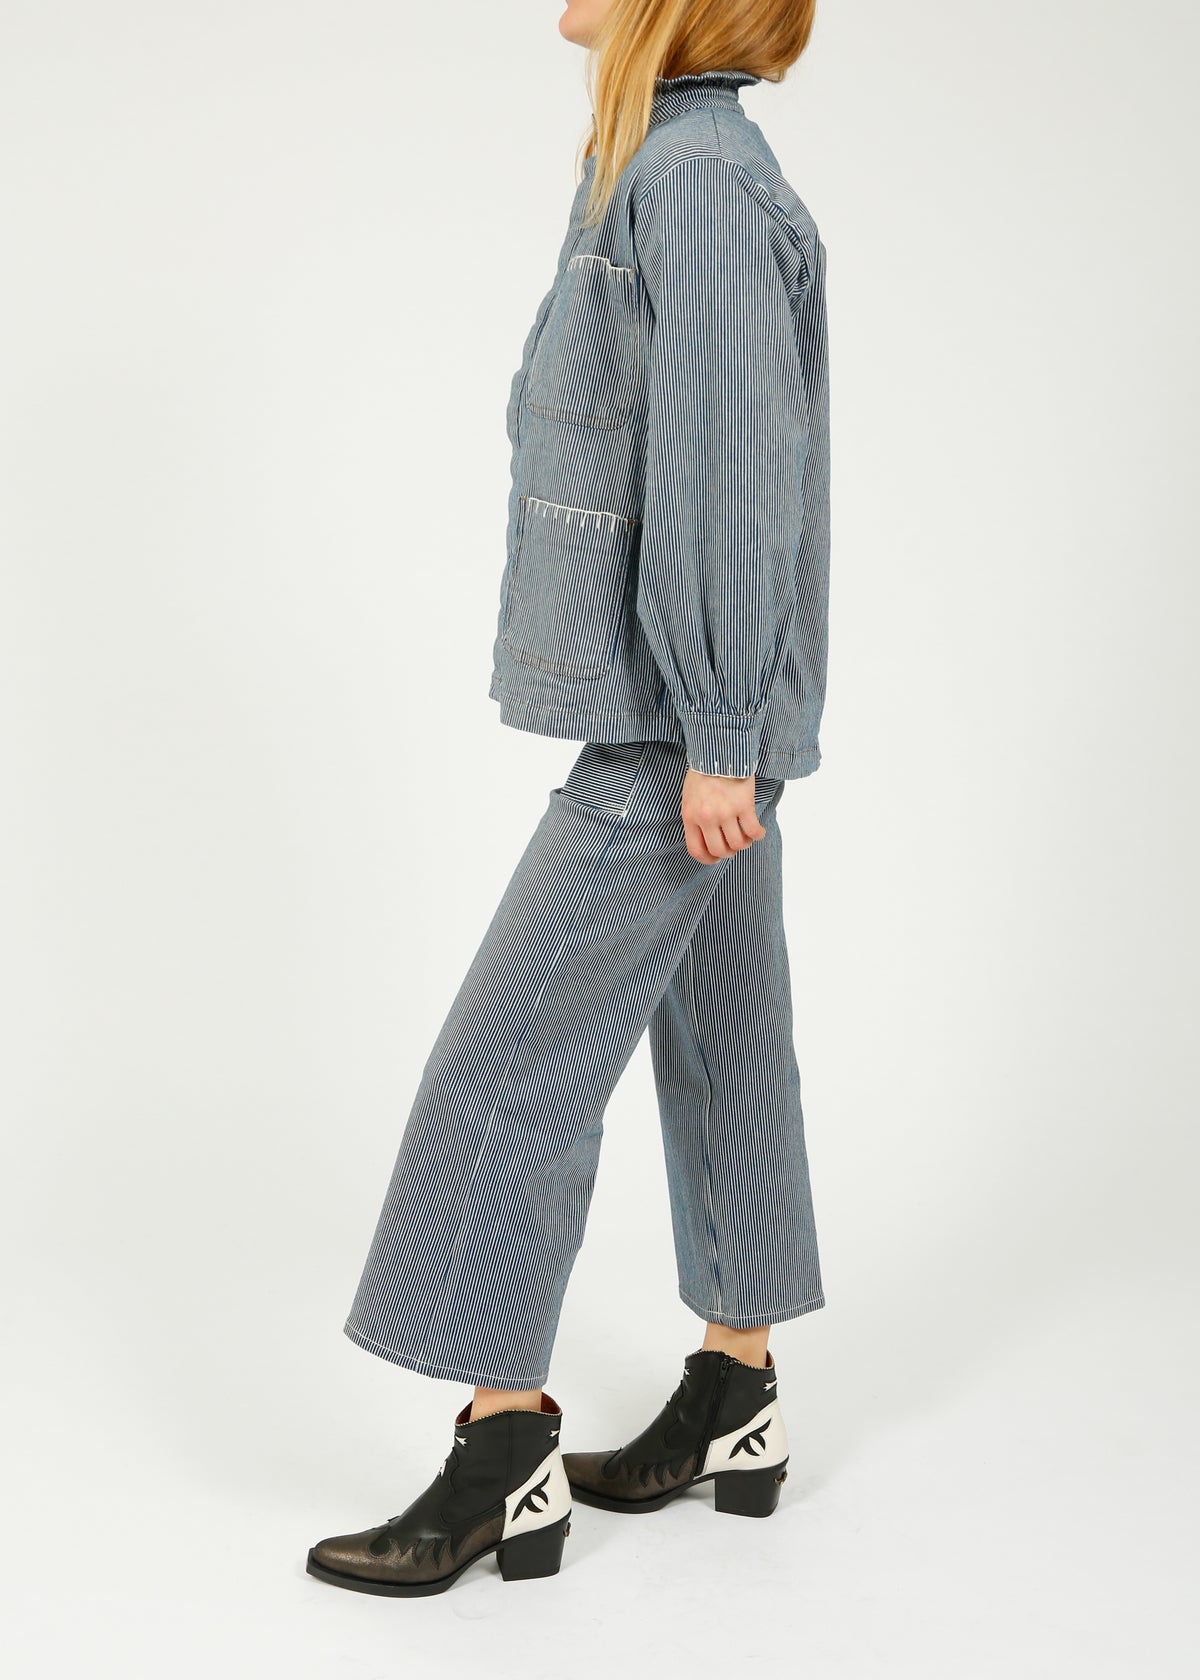 S&M Elodie Jeans in Striped Denim